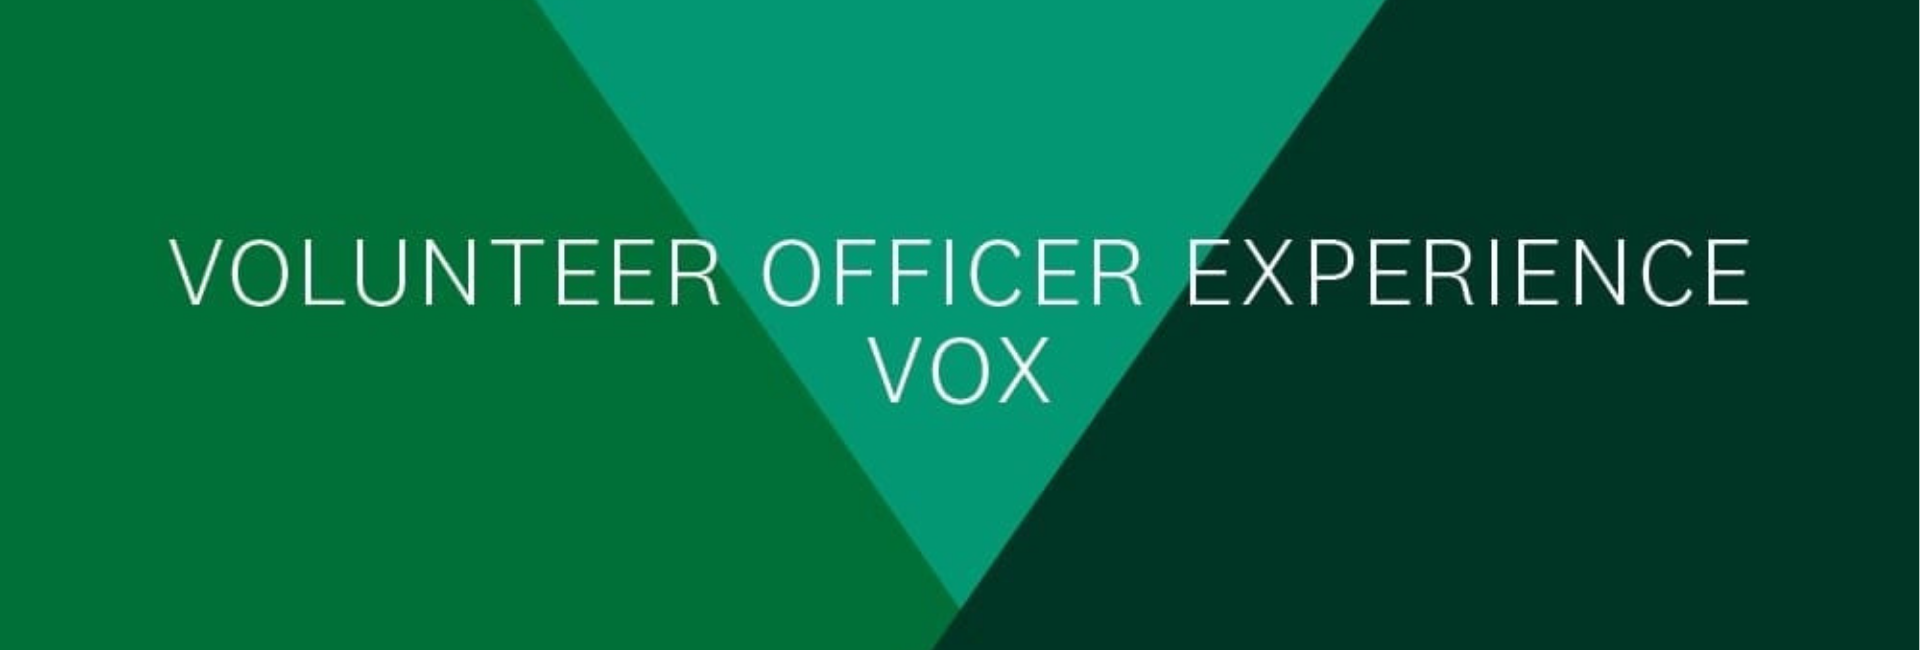 Volunteer Office Experience VOX graphic.